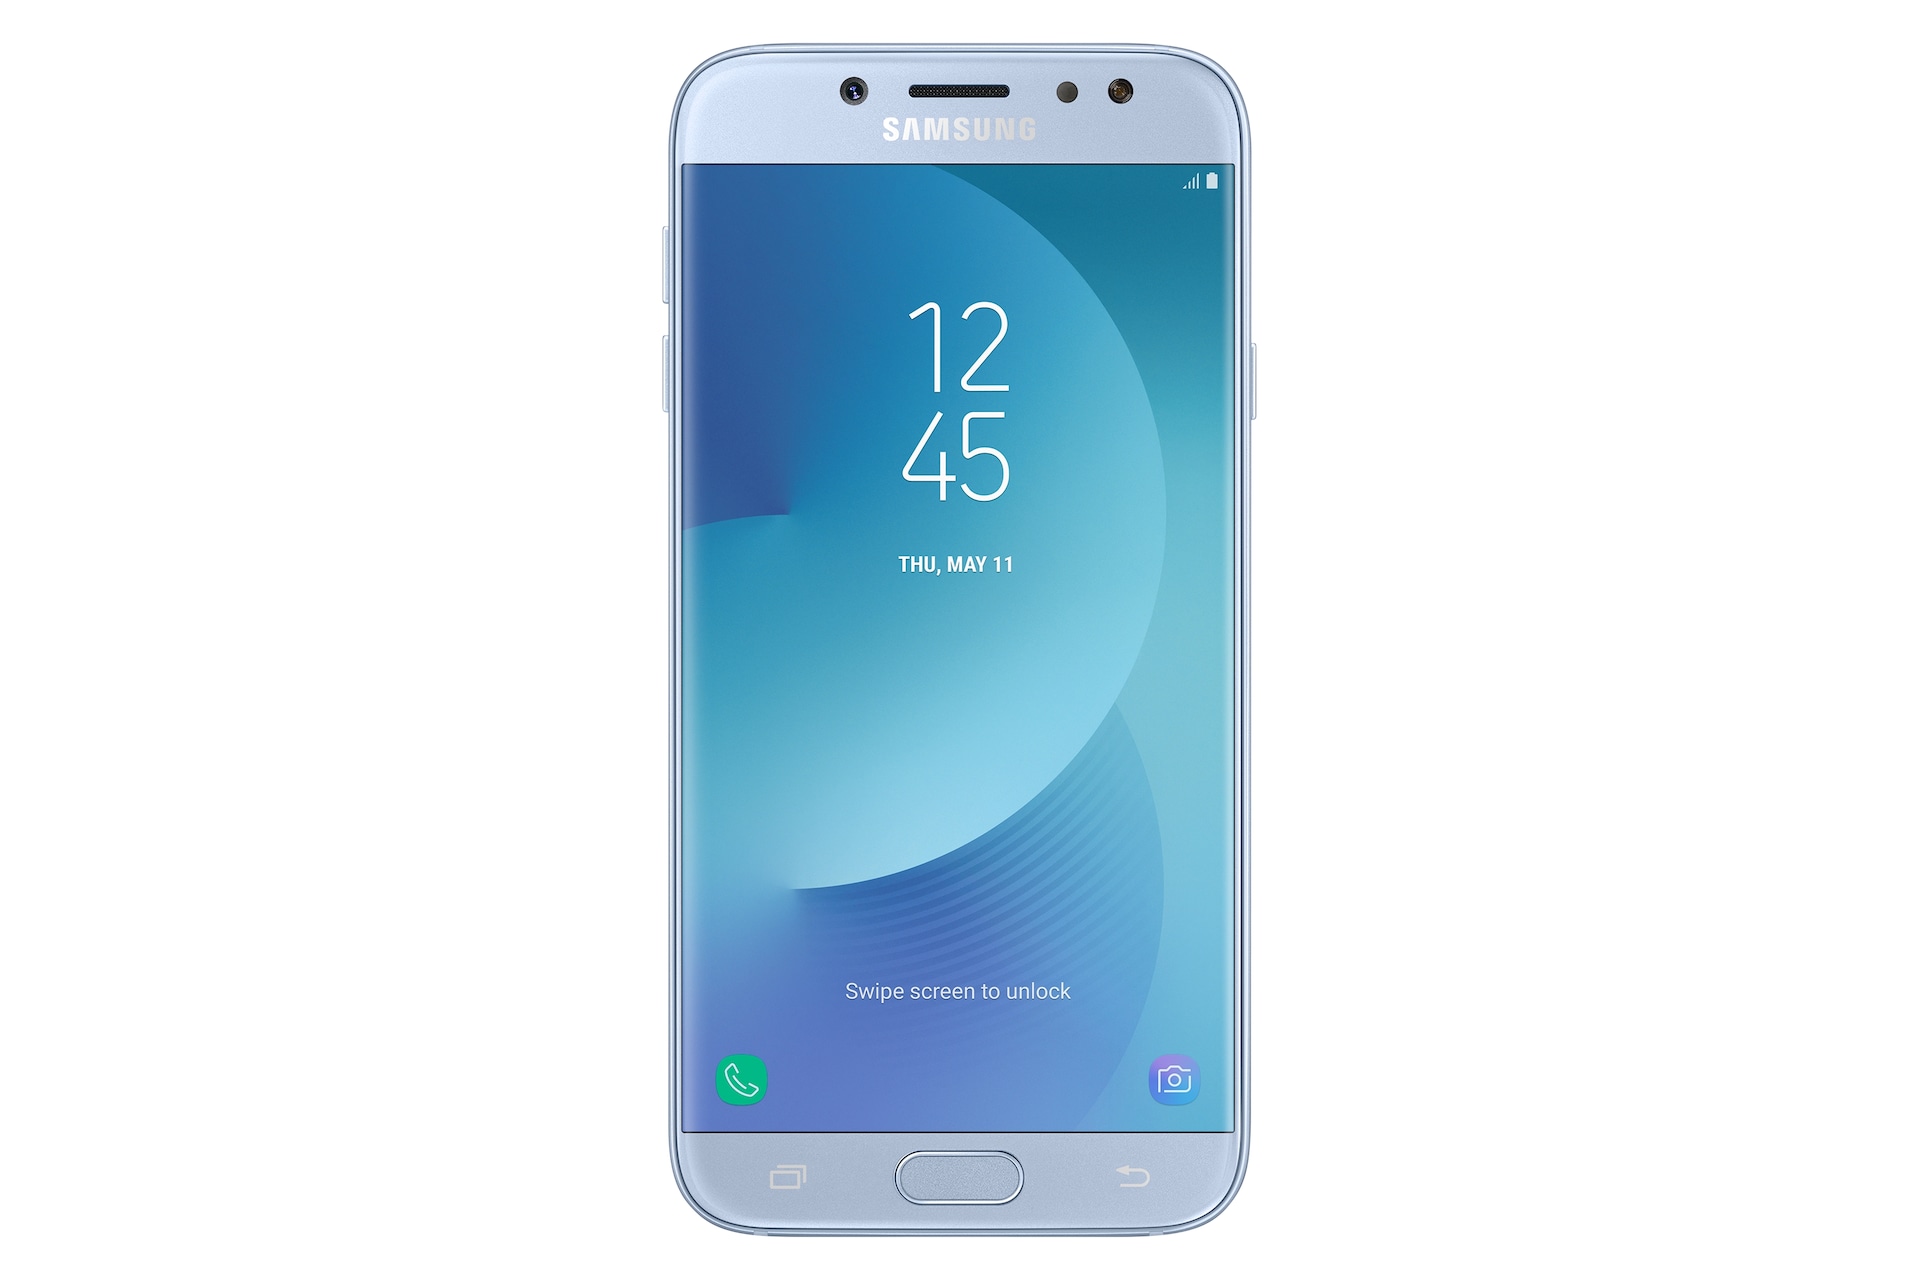 Samsung Galaxy J7 Pro 16gb Blue Silver Price And Specs Samsung Gulf